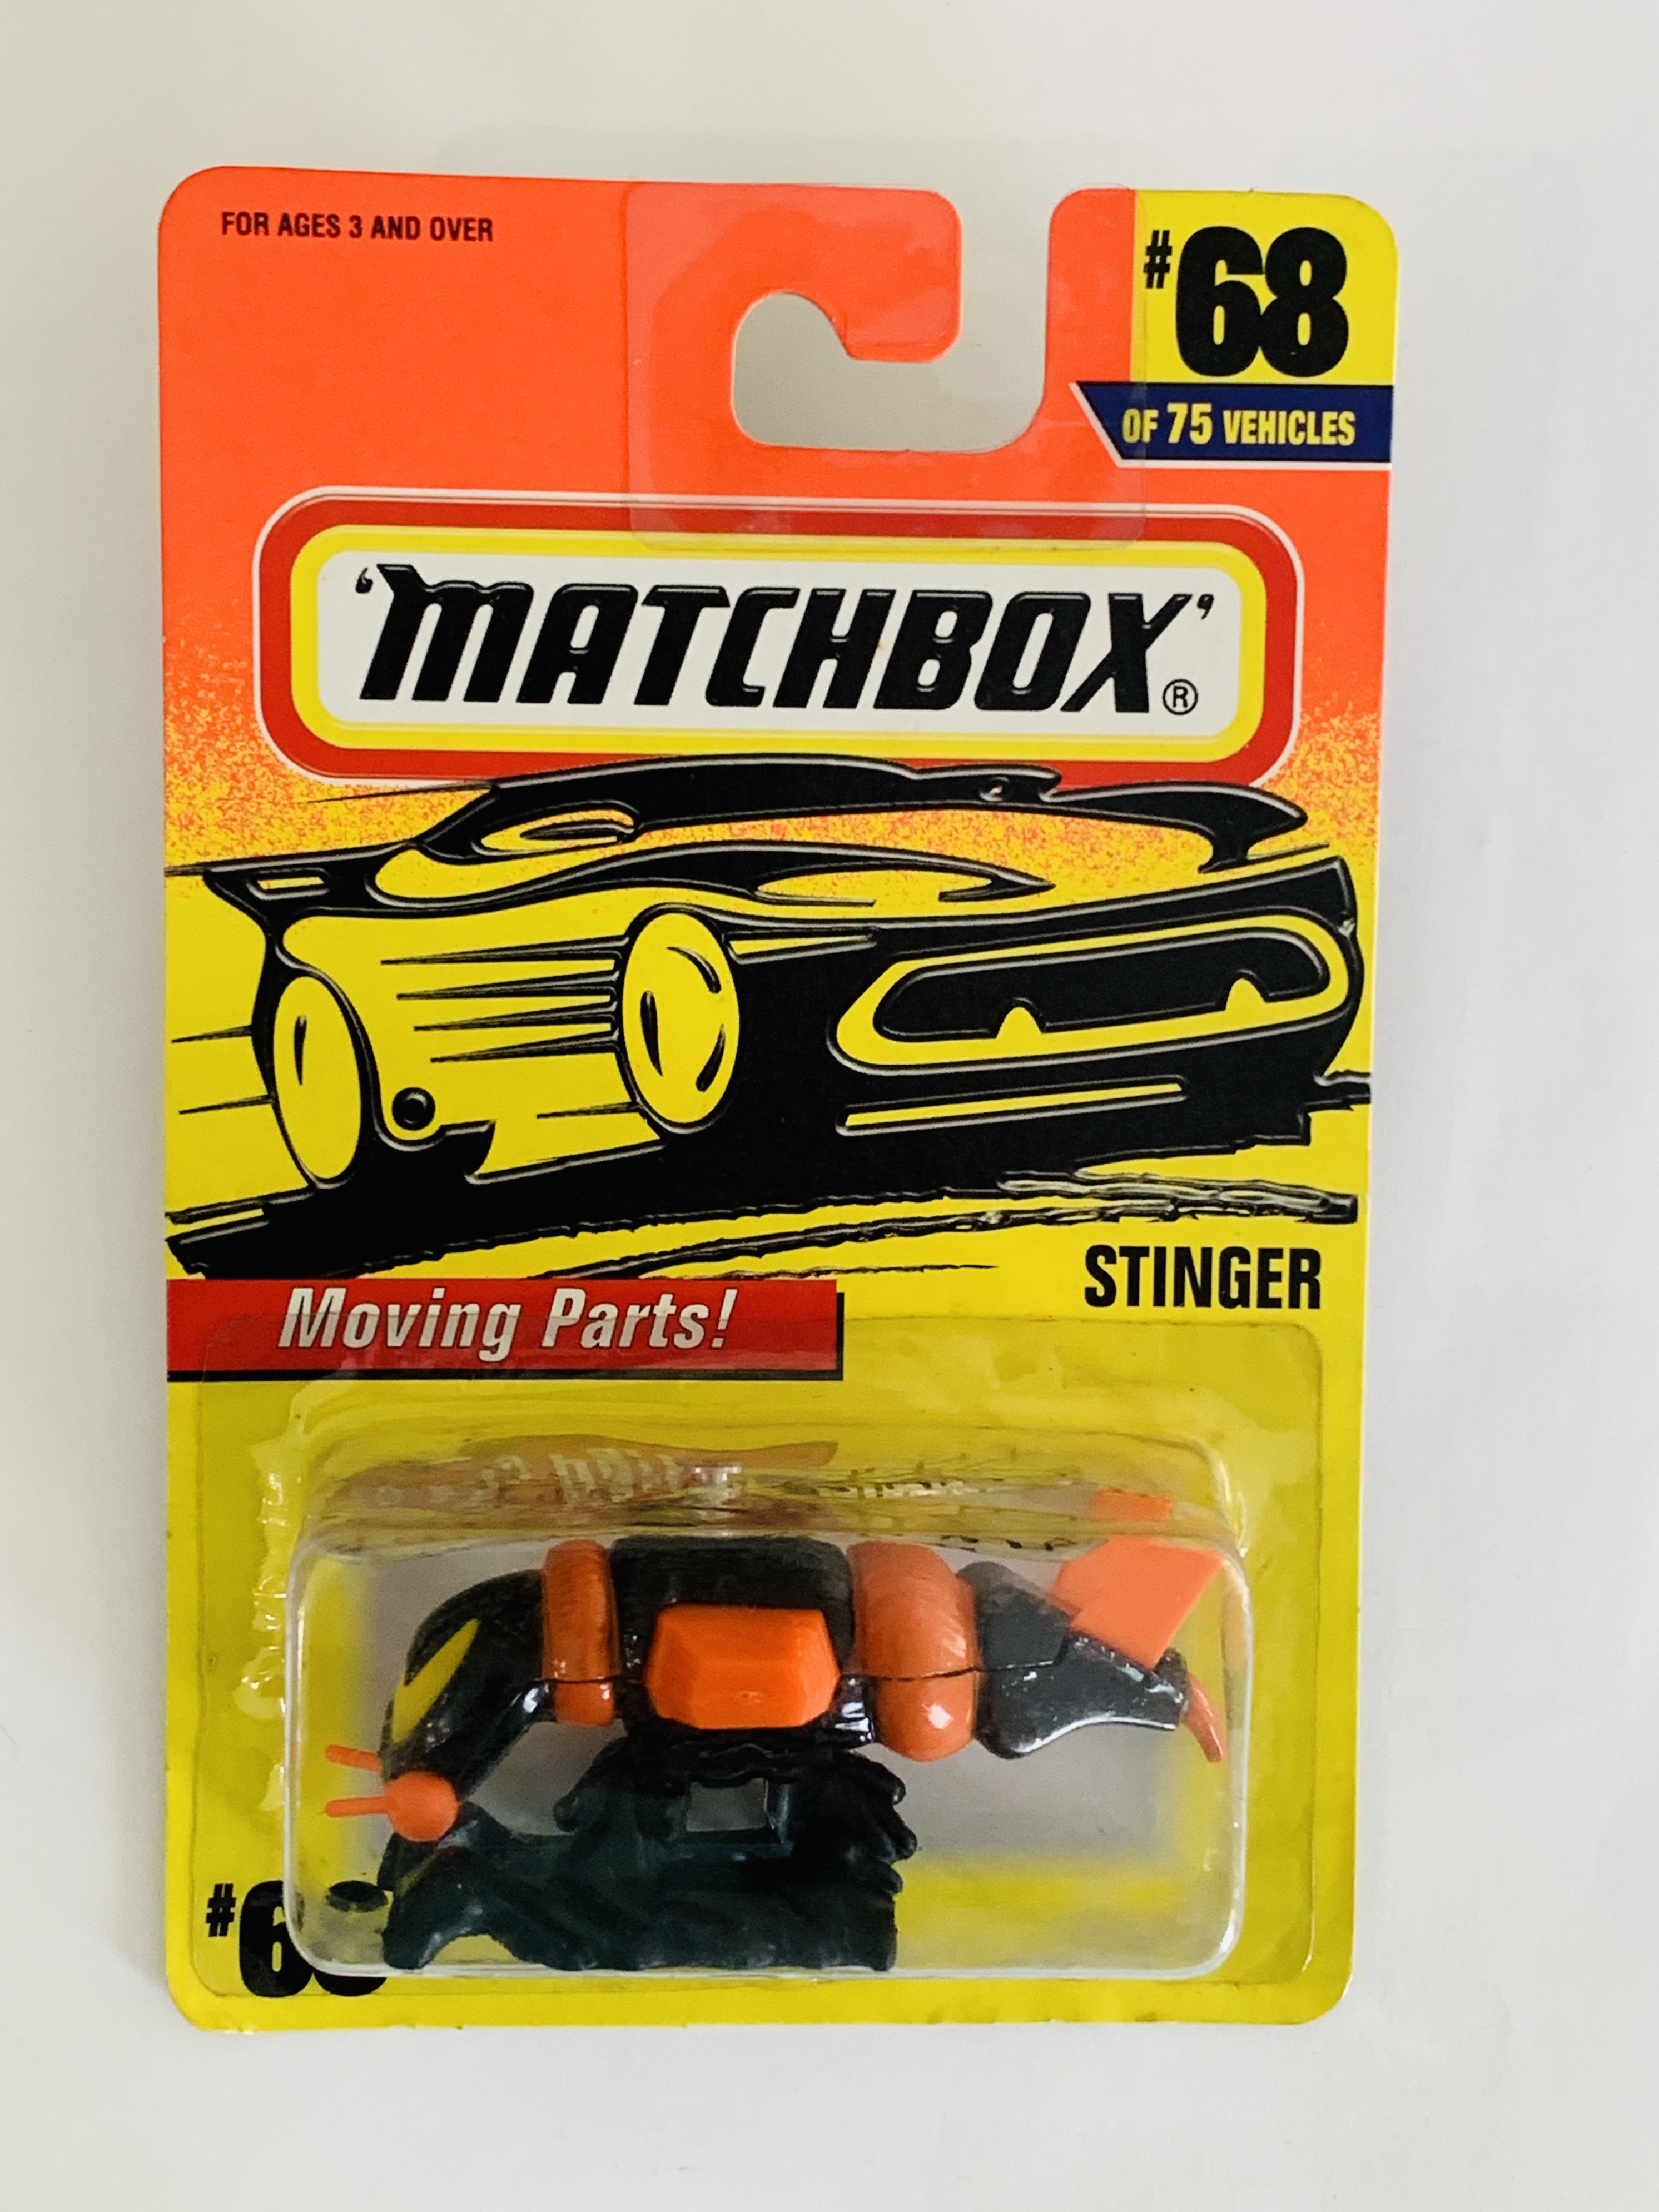 Matchbox #68 Stinger